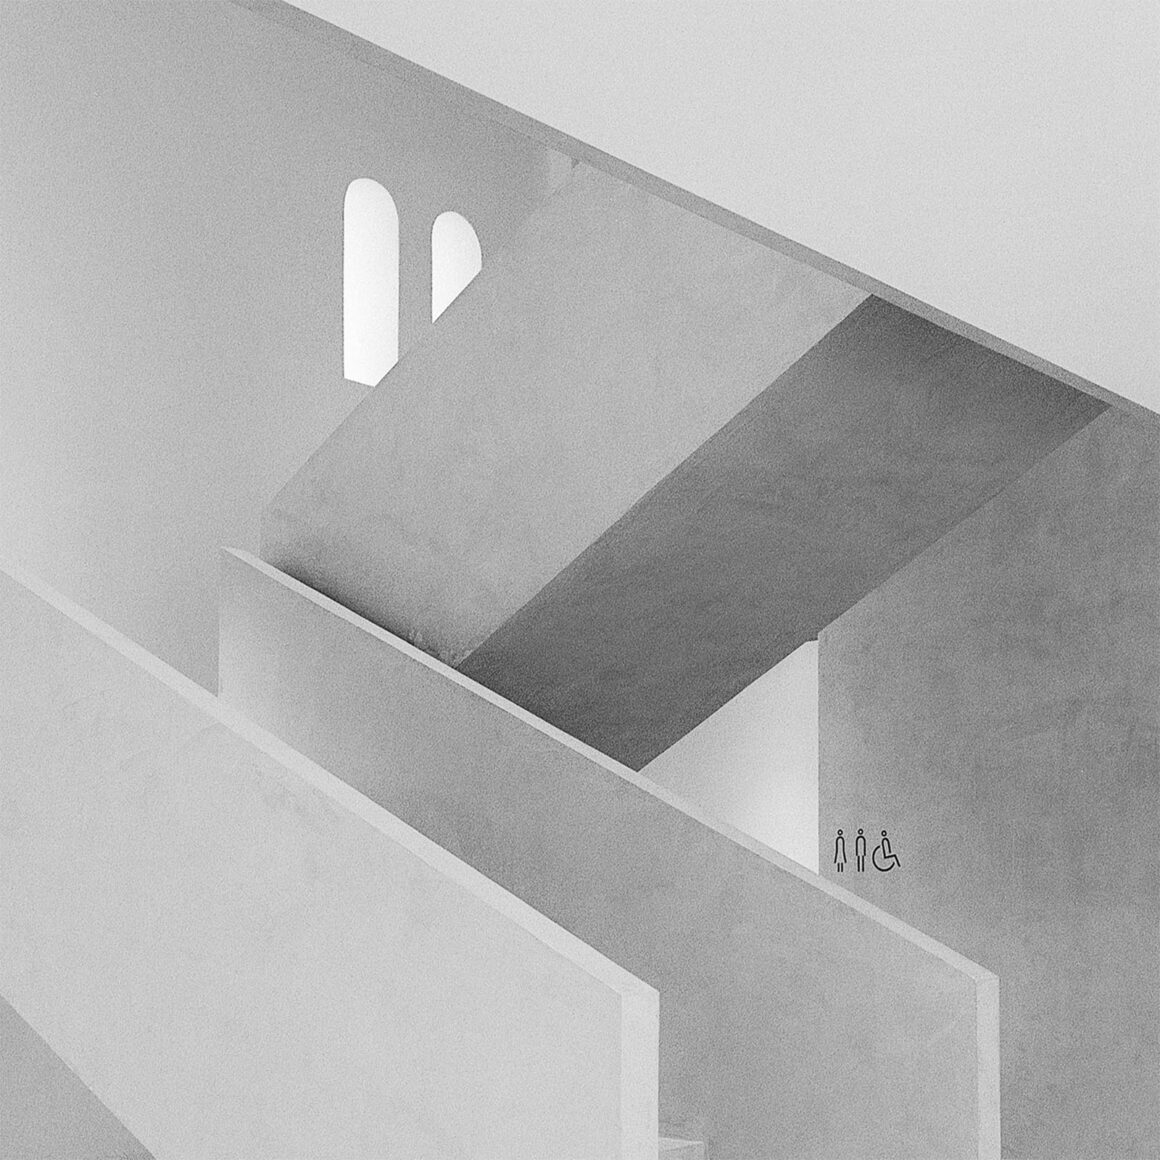 Minimalist Concrete Staircase by Daniel Zaleski